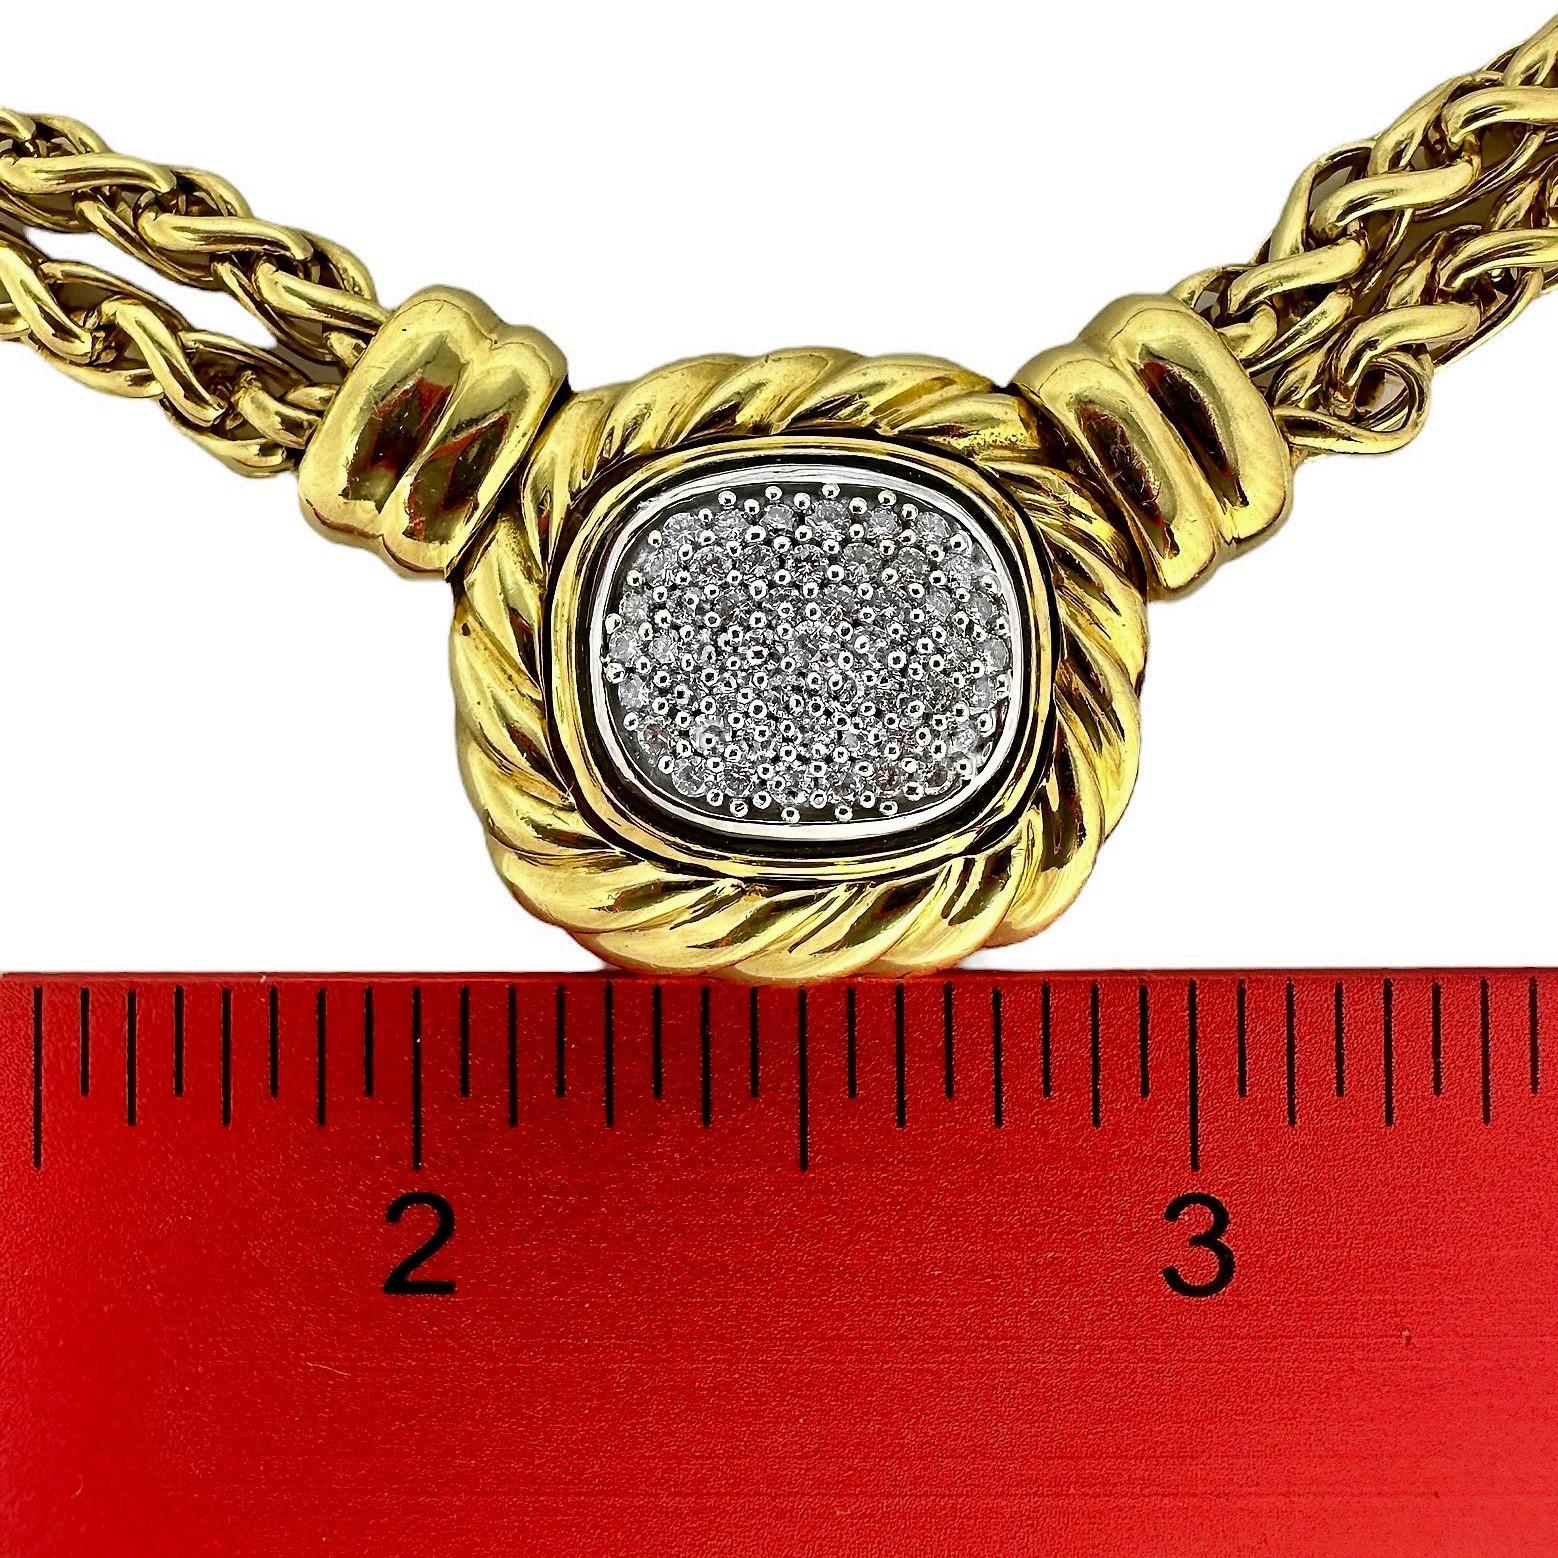 Modern David Yurman 18K Gold and Diamond Choker Necklace with Pave Set Diamond Center For Sale